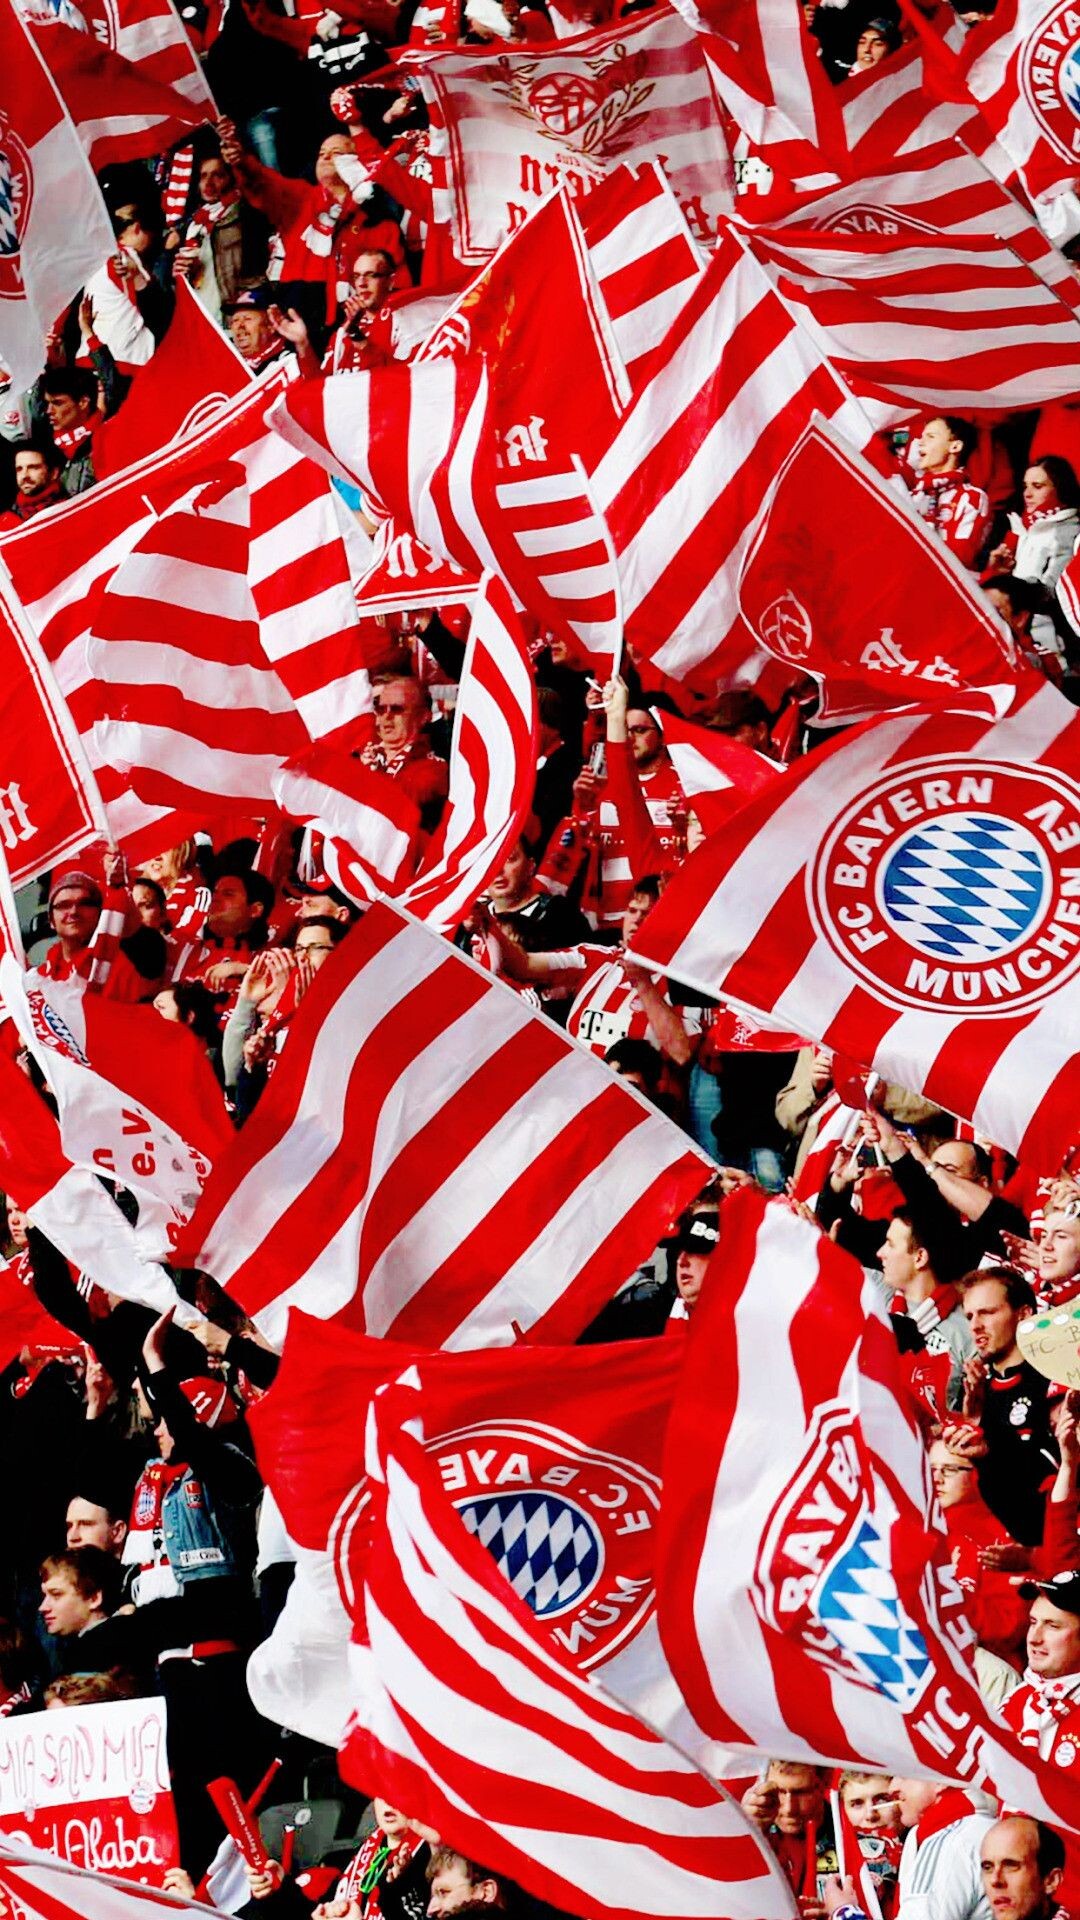 Germany Soccer Team: Fans of the Bayern Munich football club, Allianz Arena Stadium, UEFA club rating top 1. 1080x1920 Full HD Wallpaper.